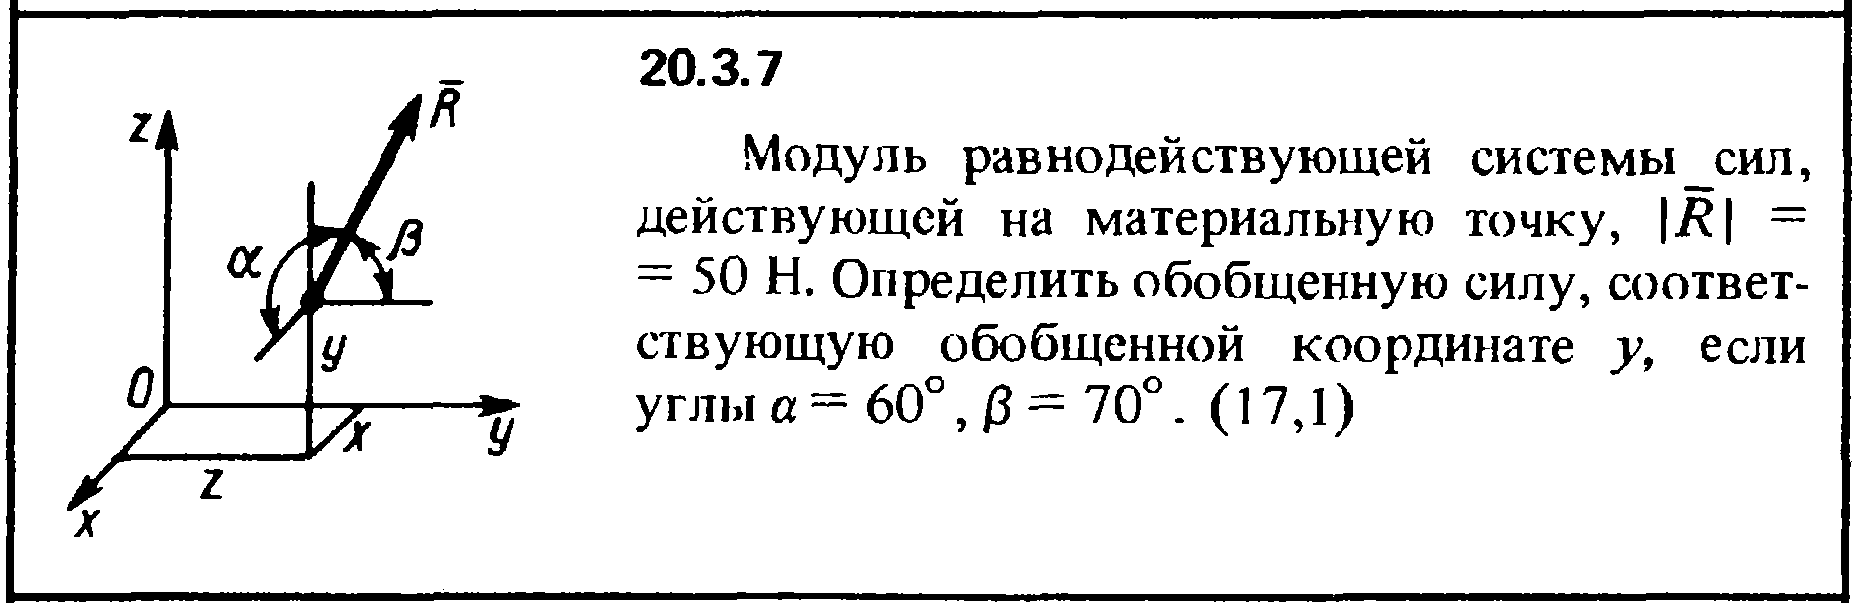 Решение 20.3.7 из сборника (решебника) Кепе О.Е. 1989